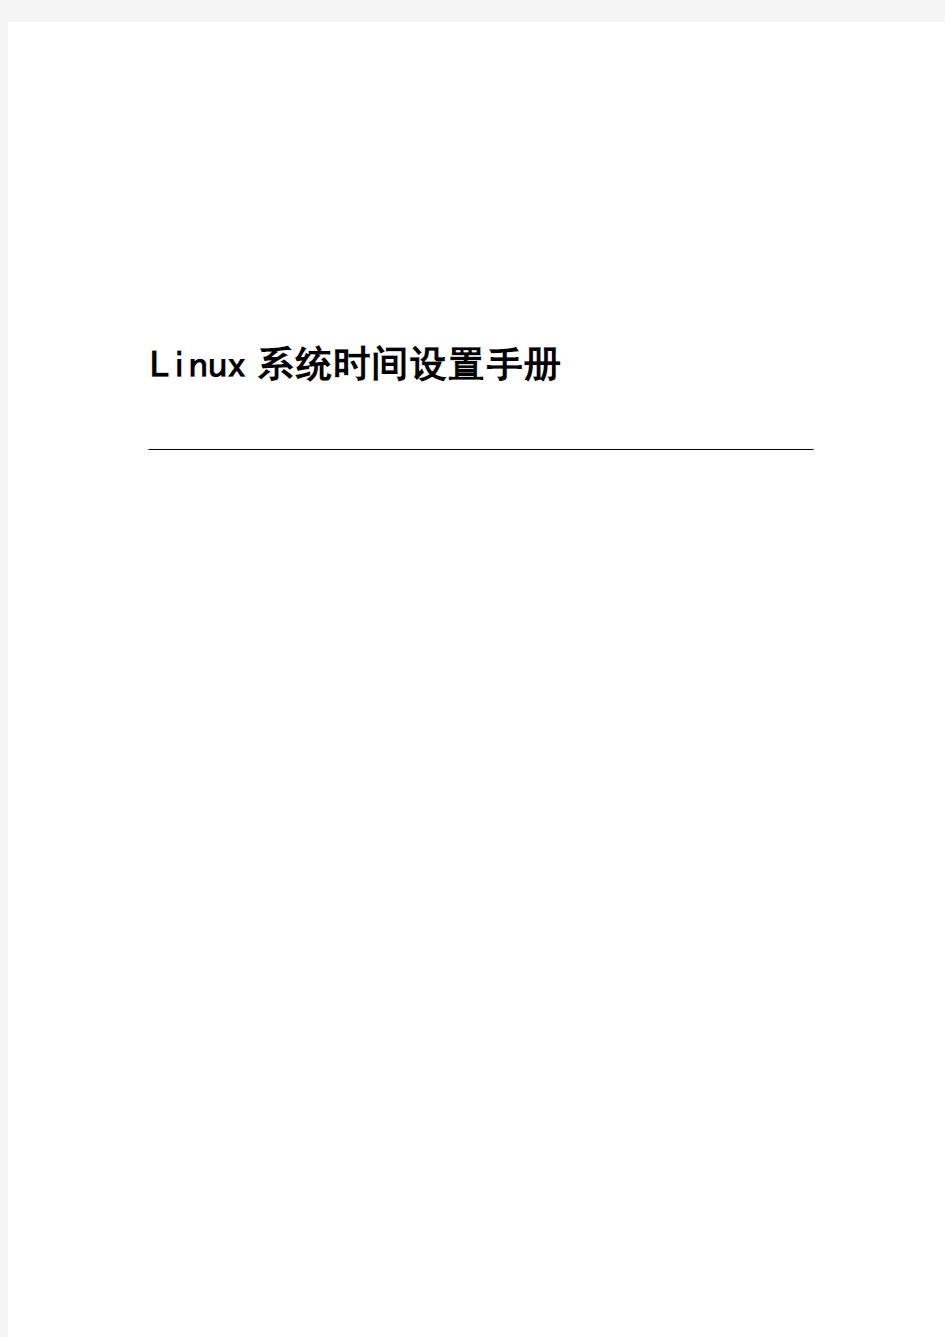 Linux系统时间设置手册